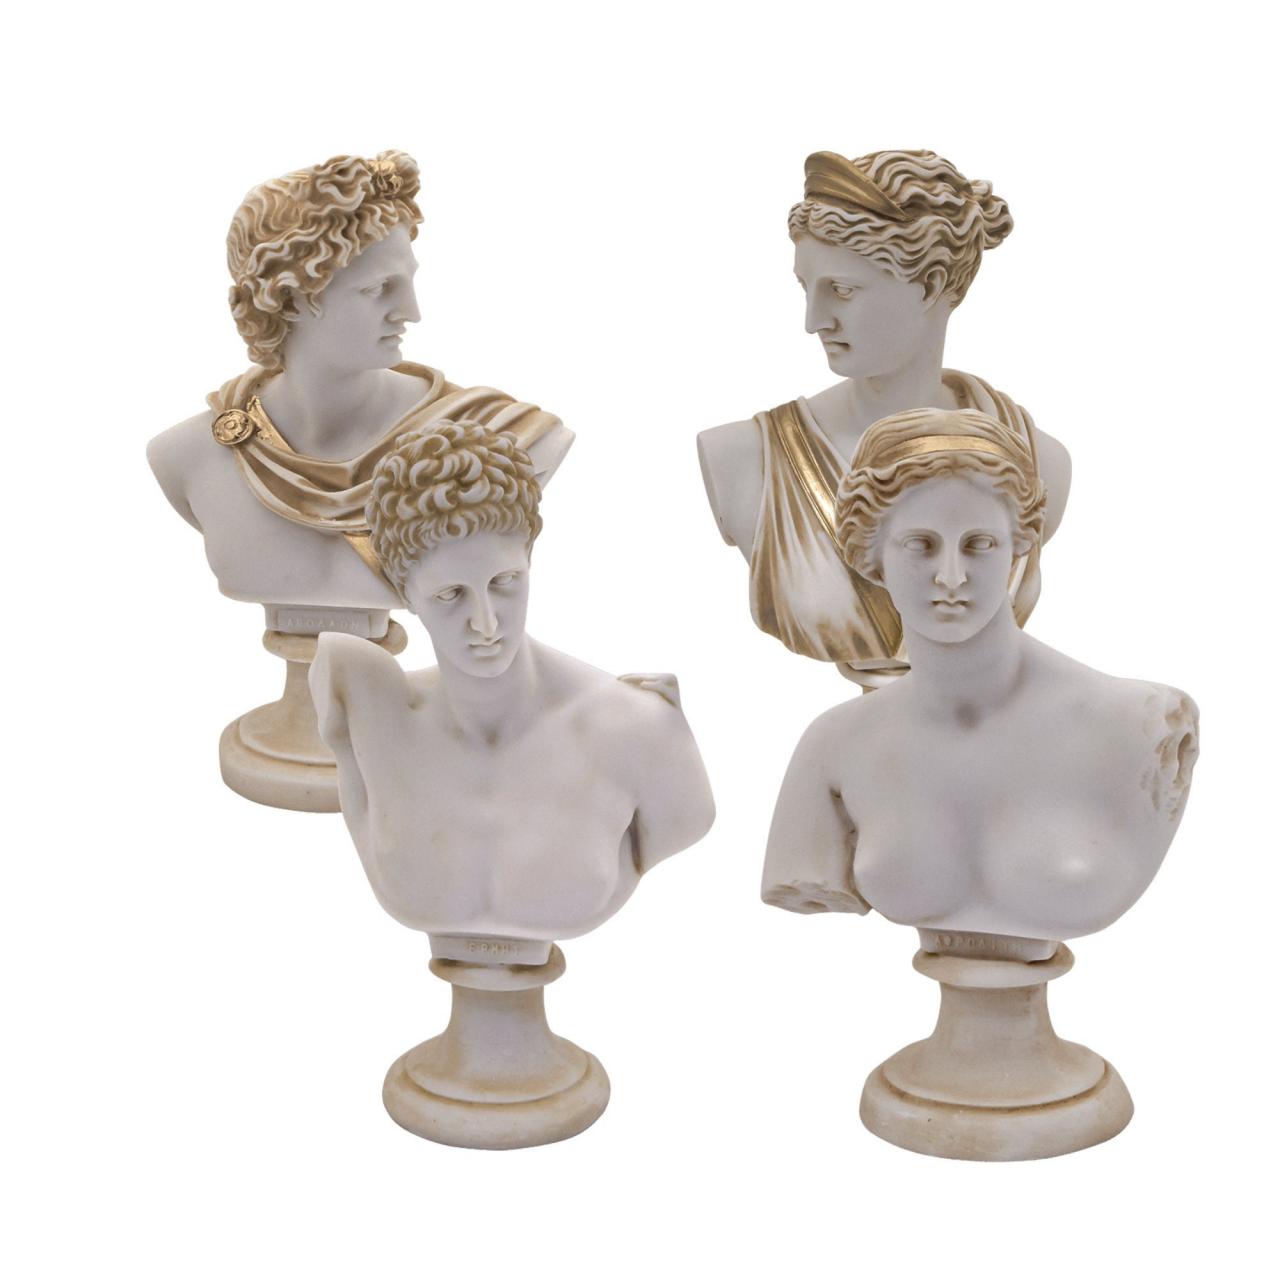 Set Busts Statues Of Apollo God, Artemis Diana Goddess, Hermes God, Aphrodite Venus Goddess 15cm Height